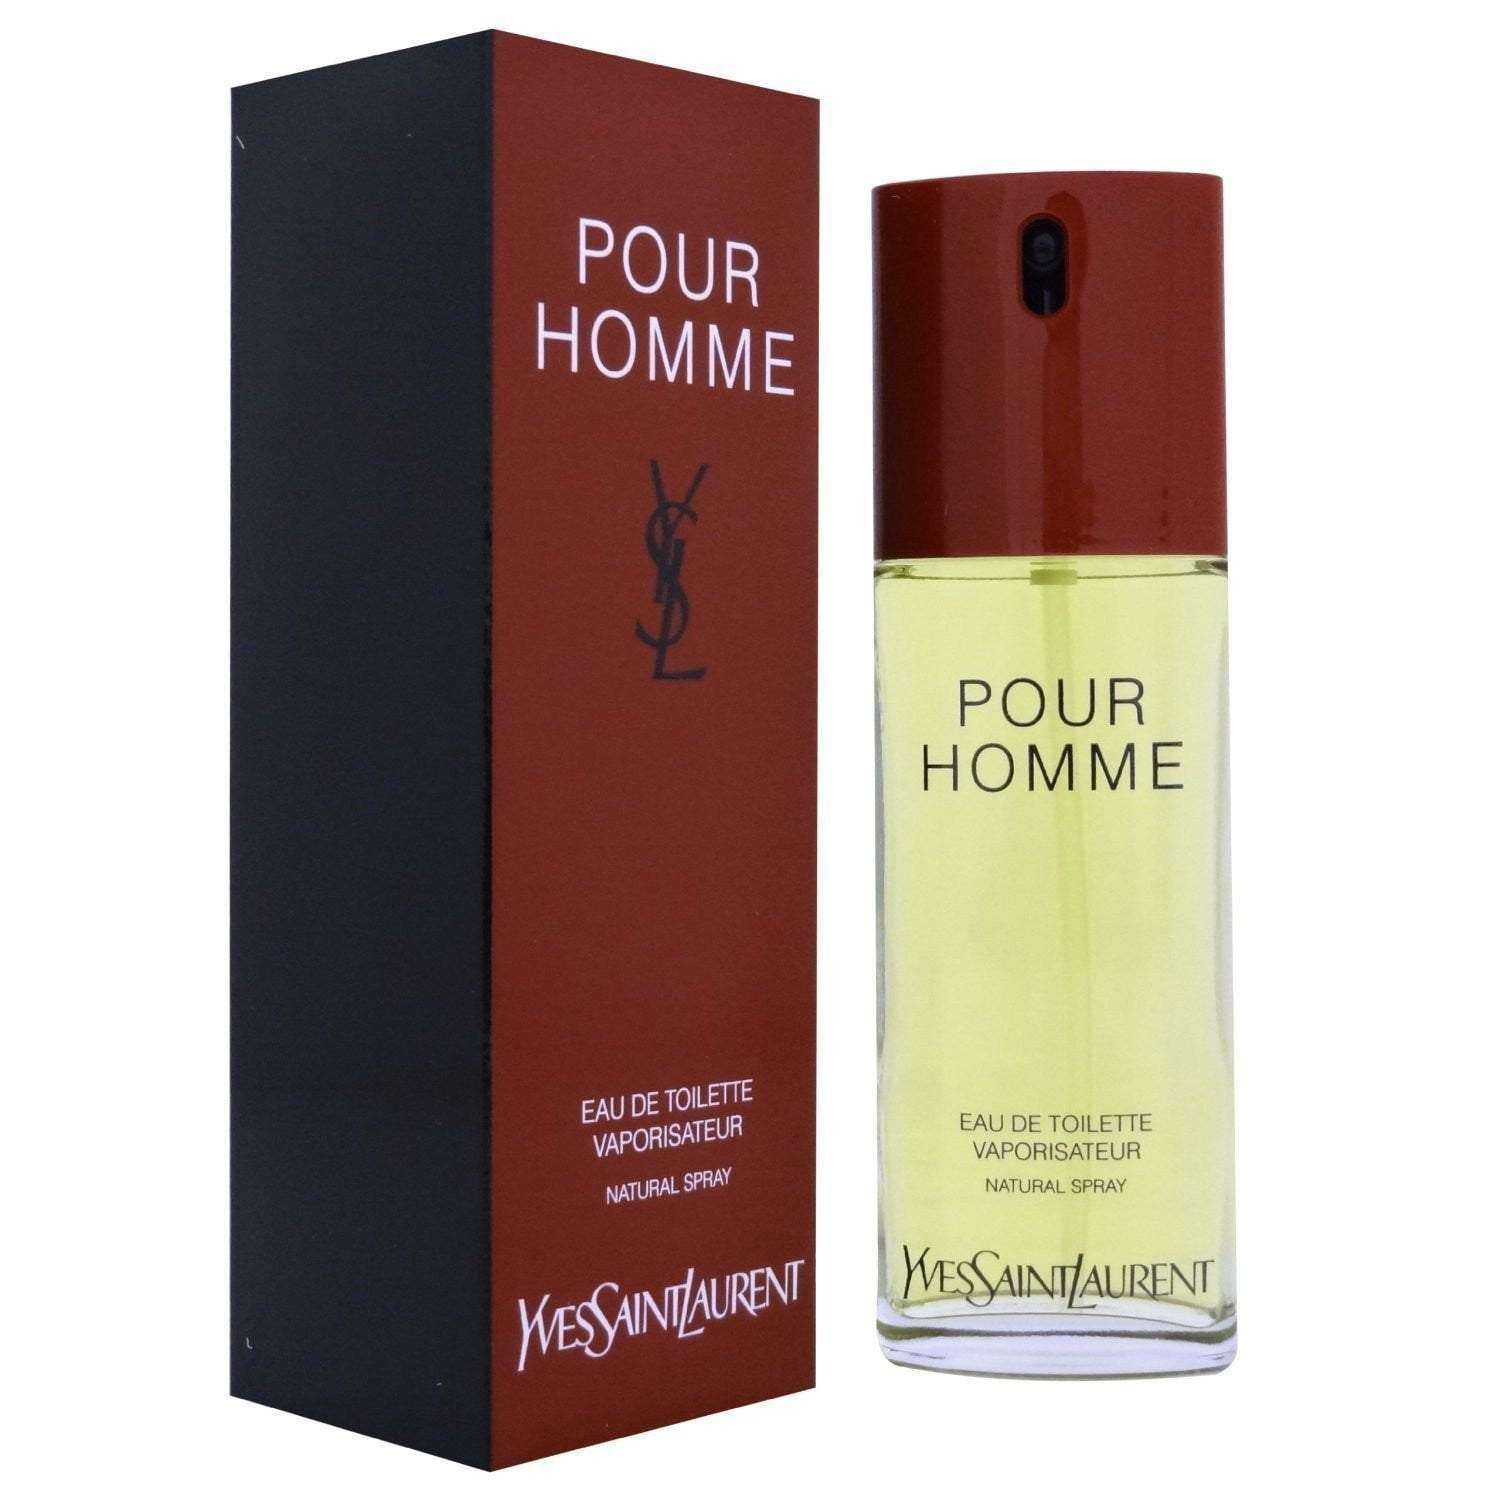 Yves Saint Laurent Pour Homme | Buy Perfume Online | My Perfume Shop